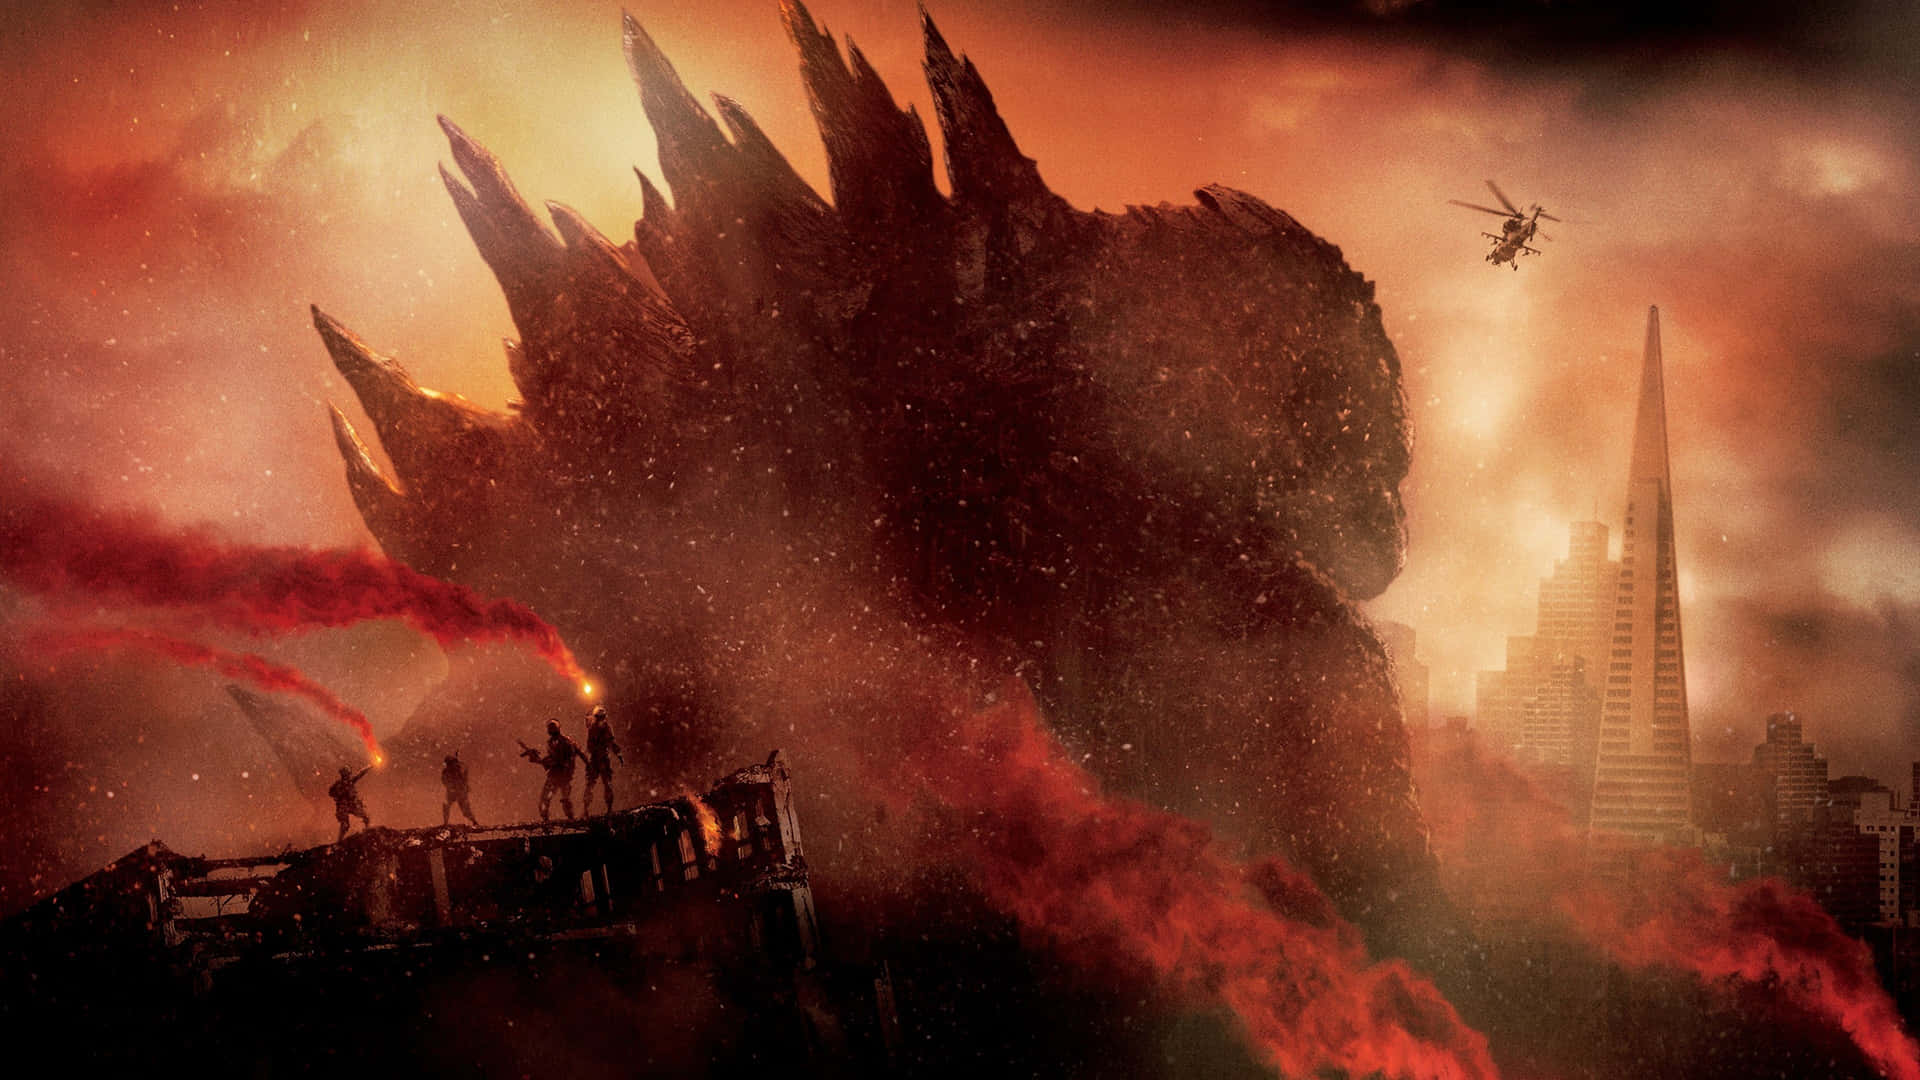 Unleashing the fearsome Godzilla